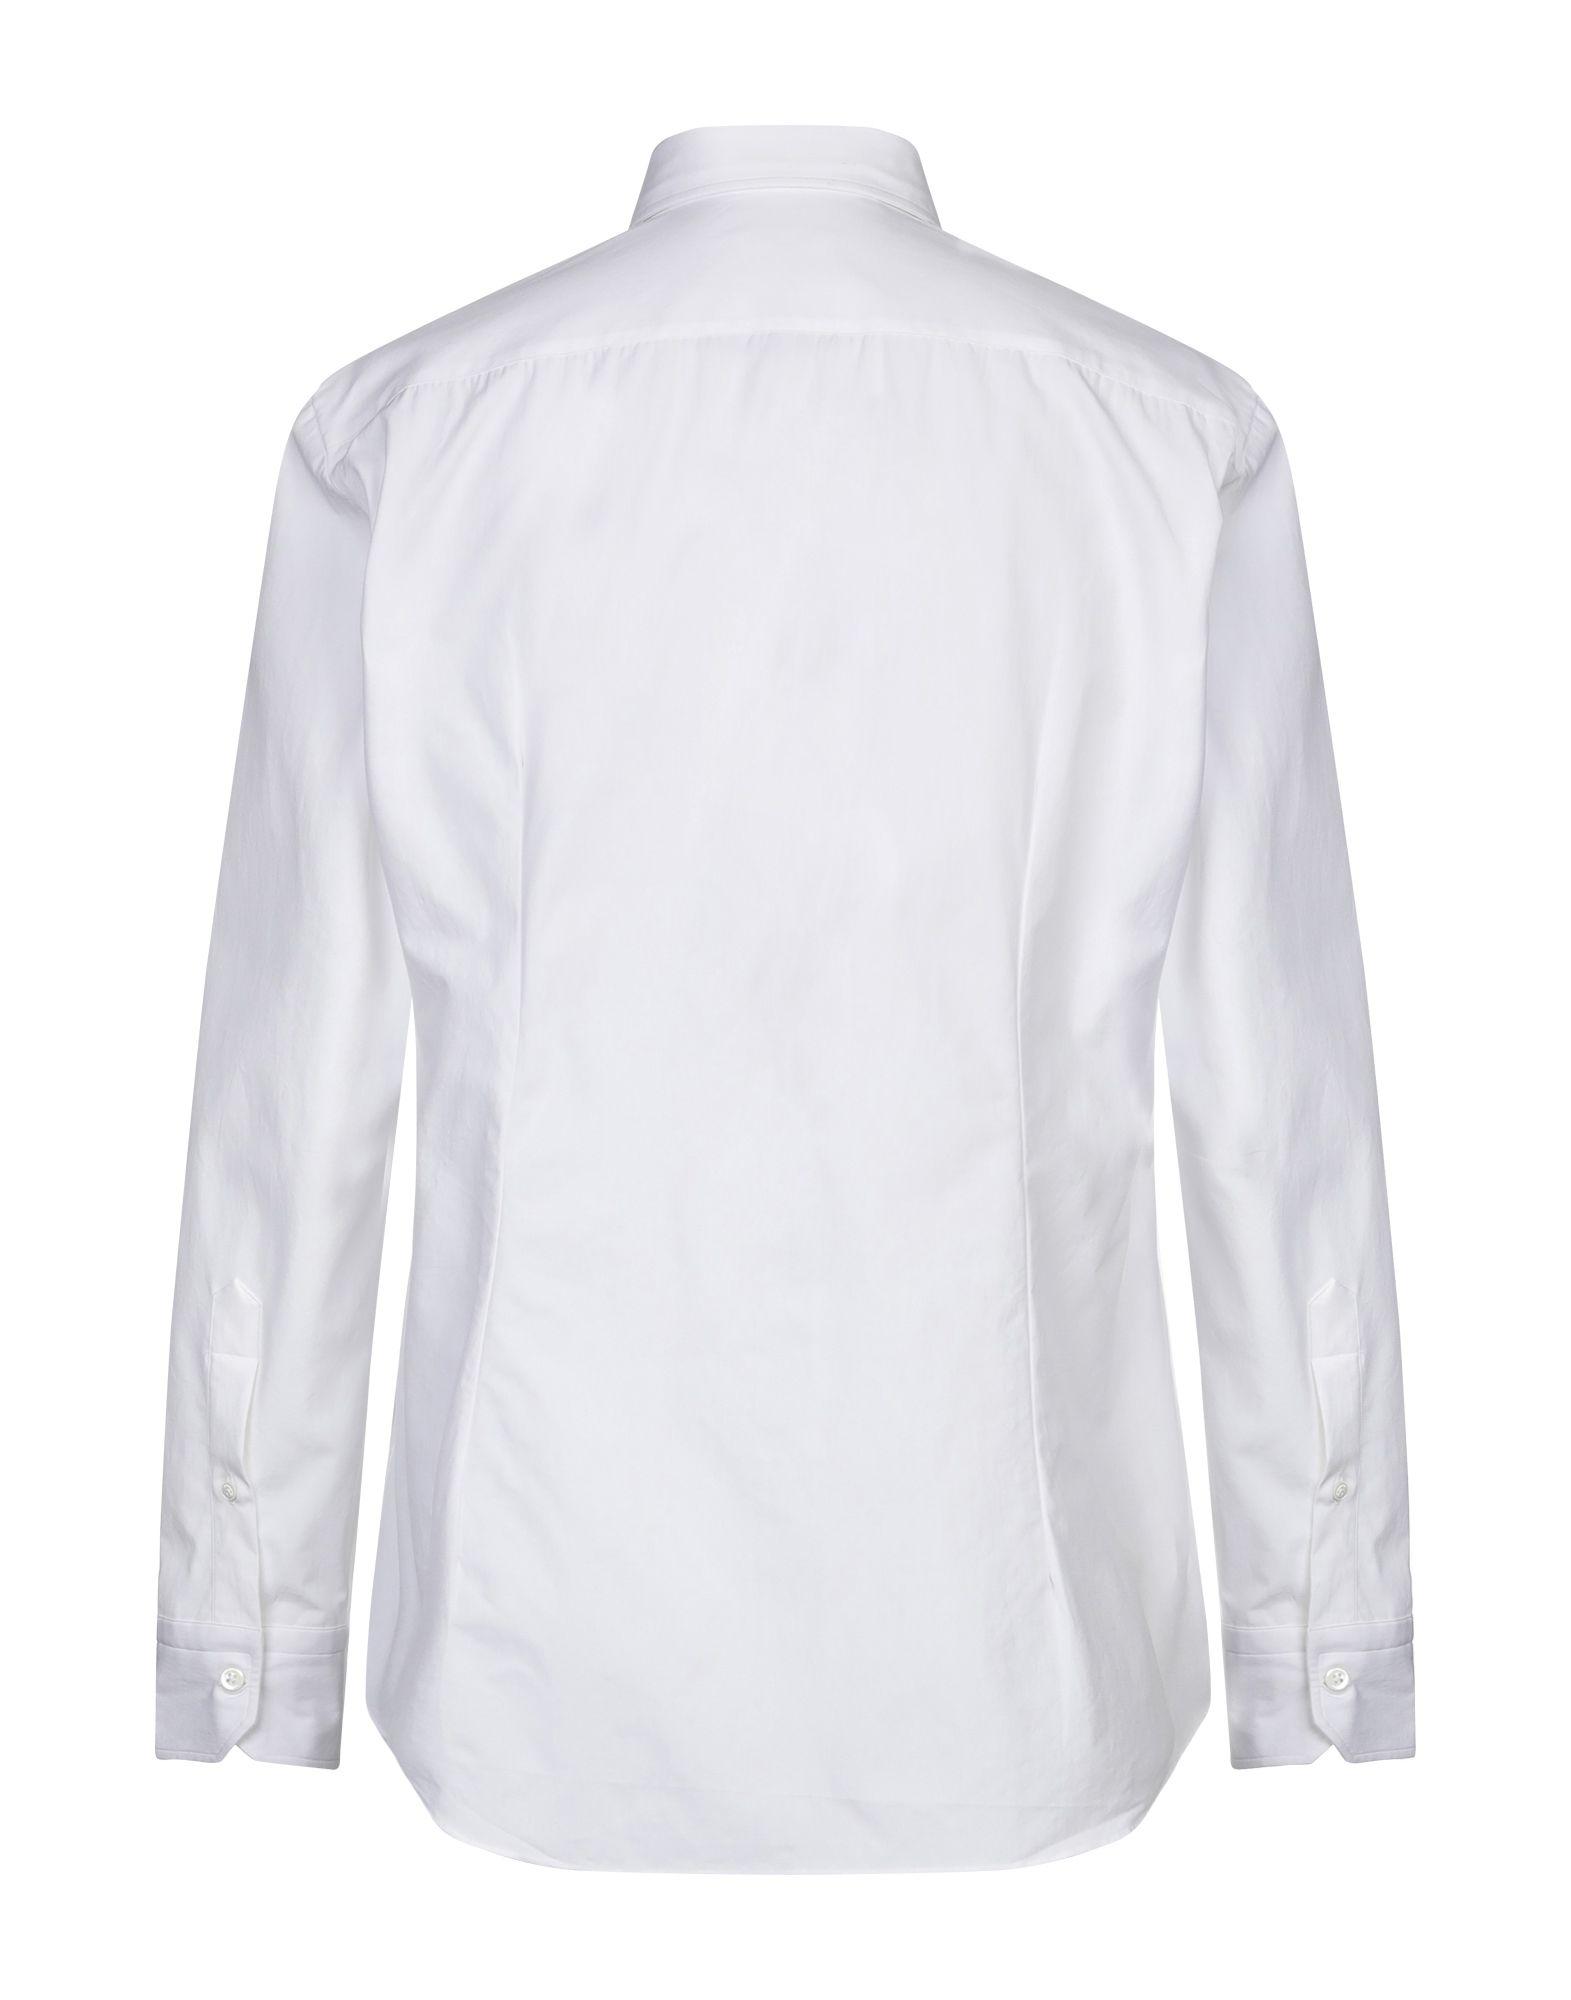 Salvatore Piccolo Shirt in White for Men - Lyst